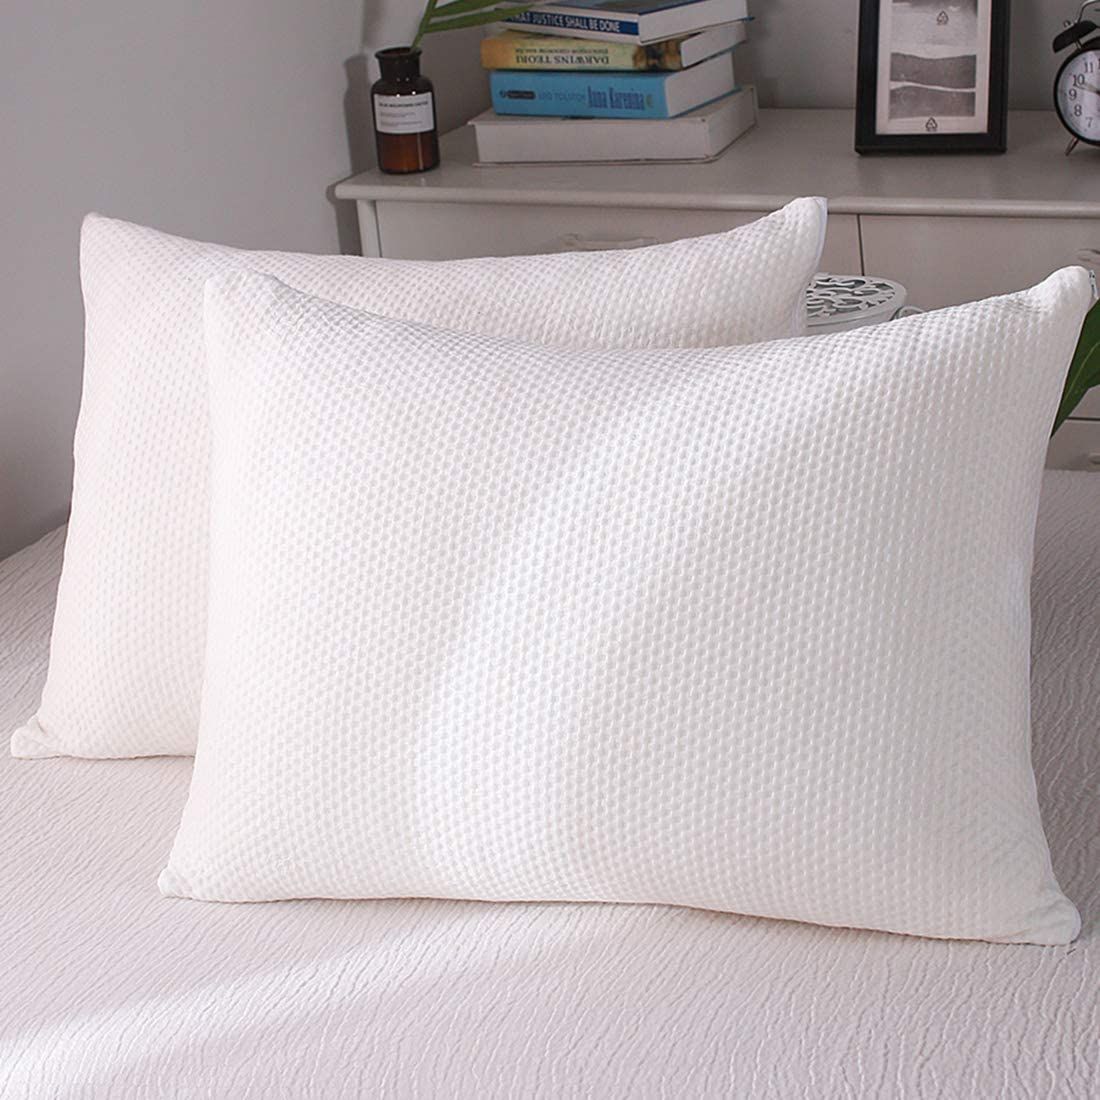 wellpur memory foam pillow review